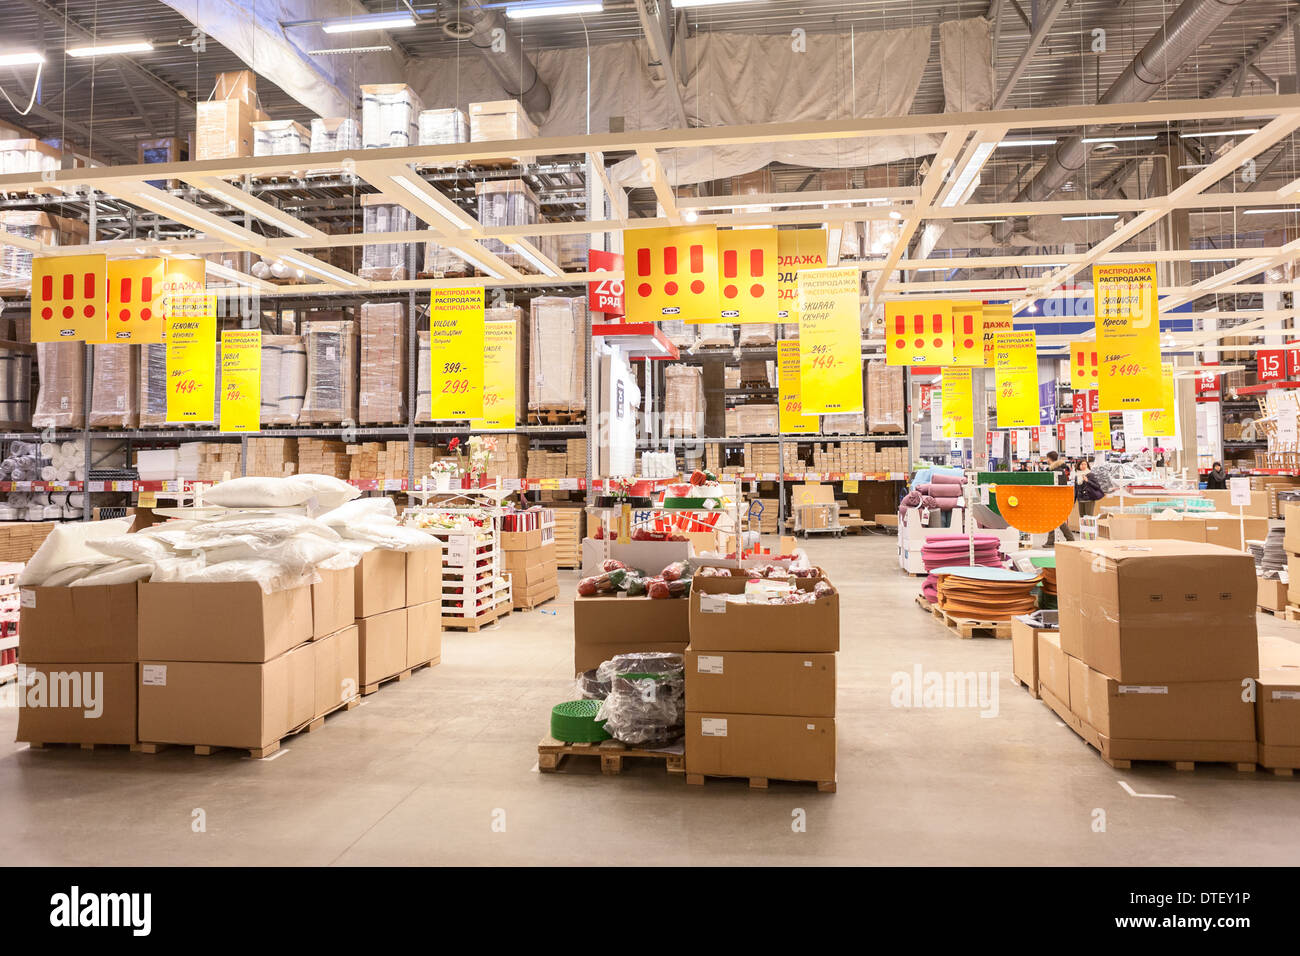 Ikea warehouse in wholesale store, Russia Stock Photo - Alamy